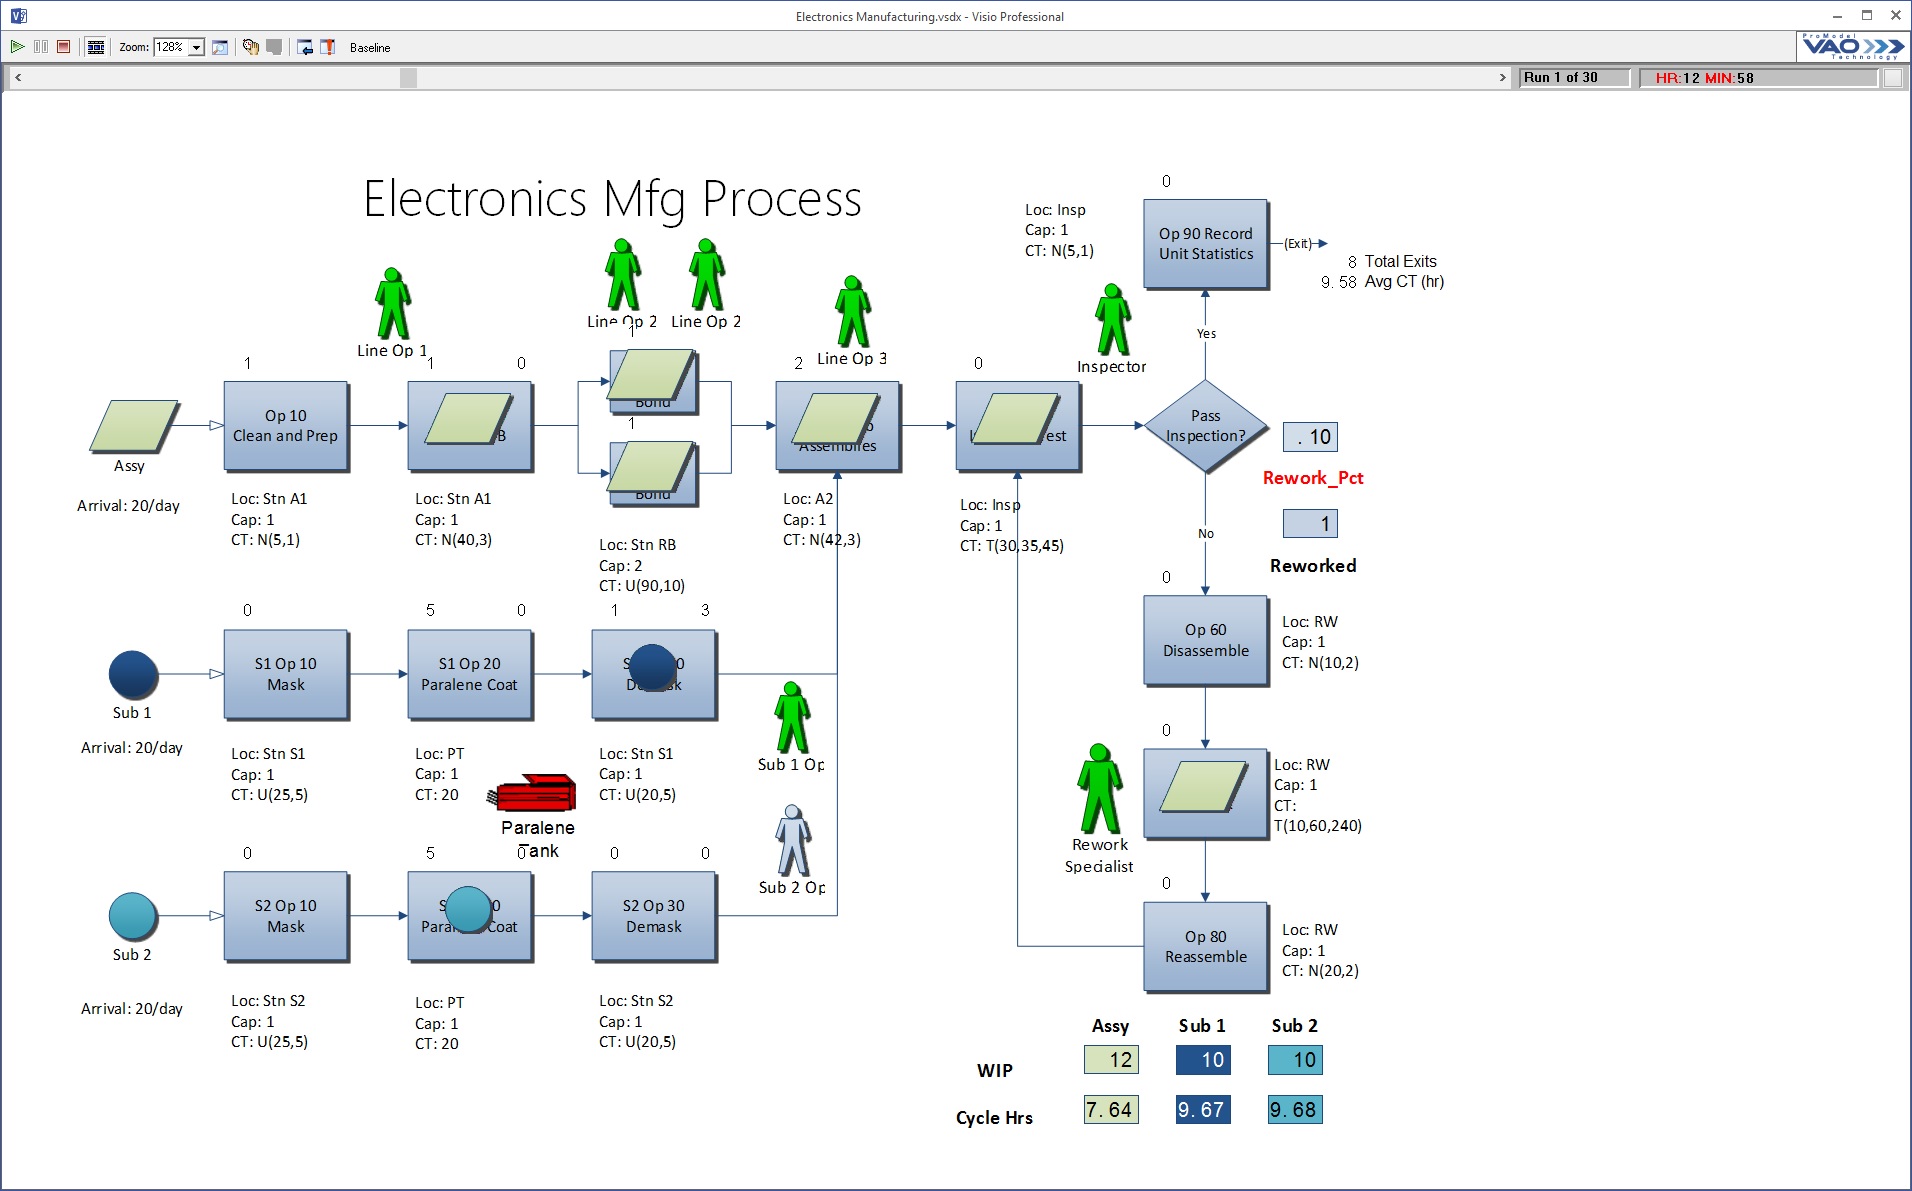  electronics mfg process simulation